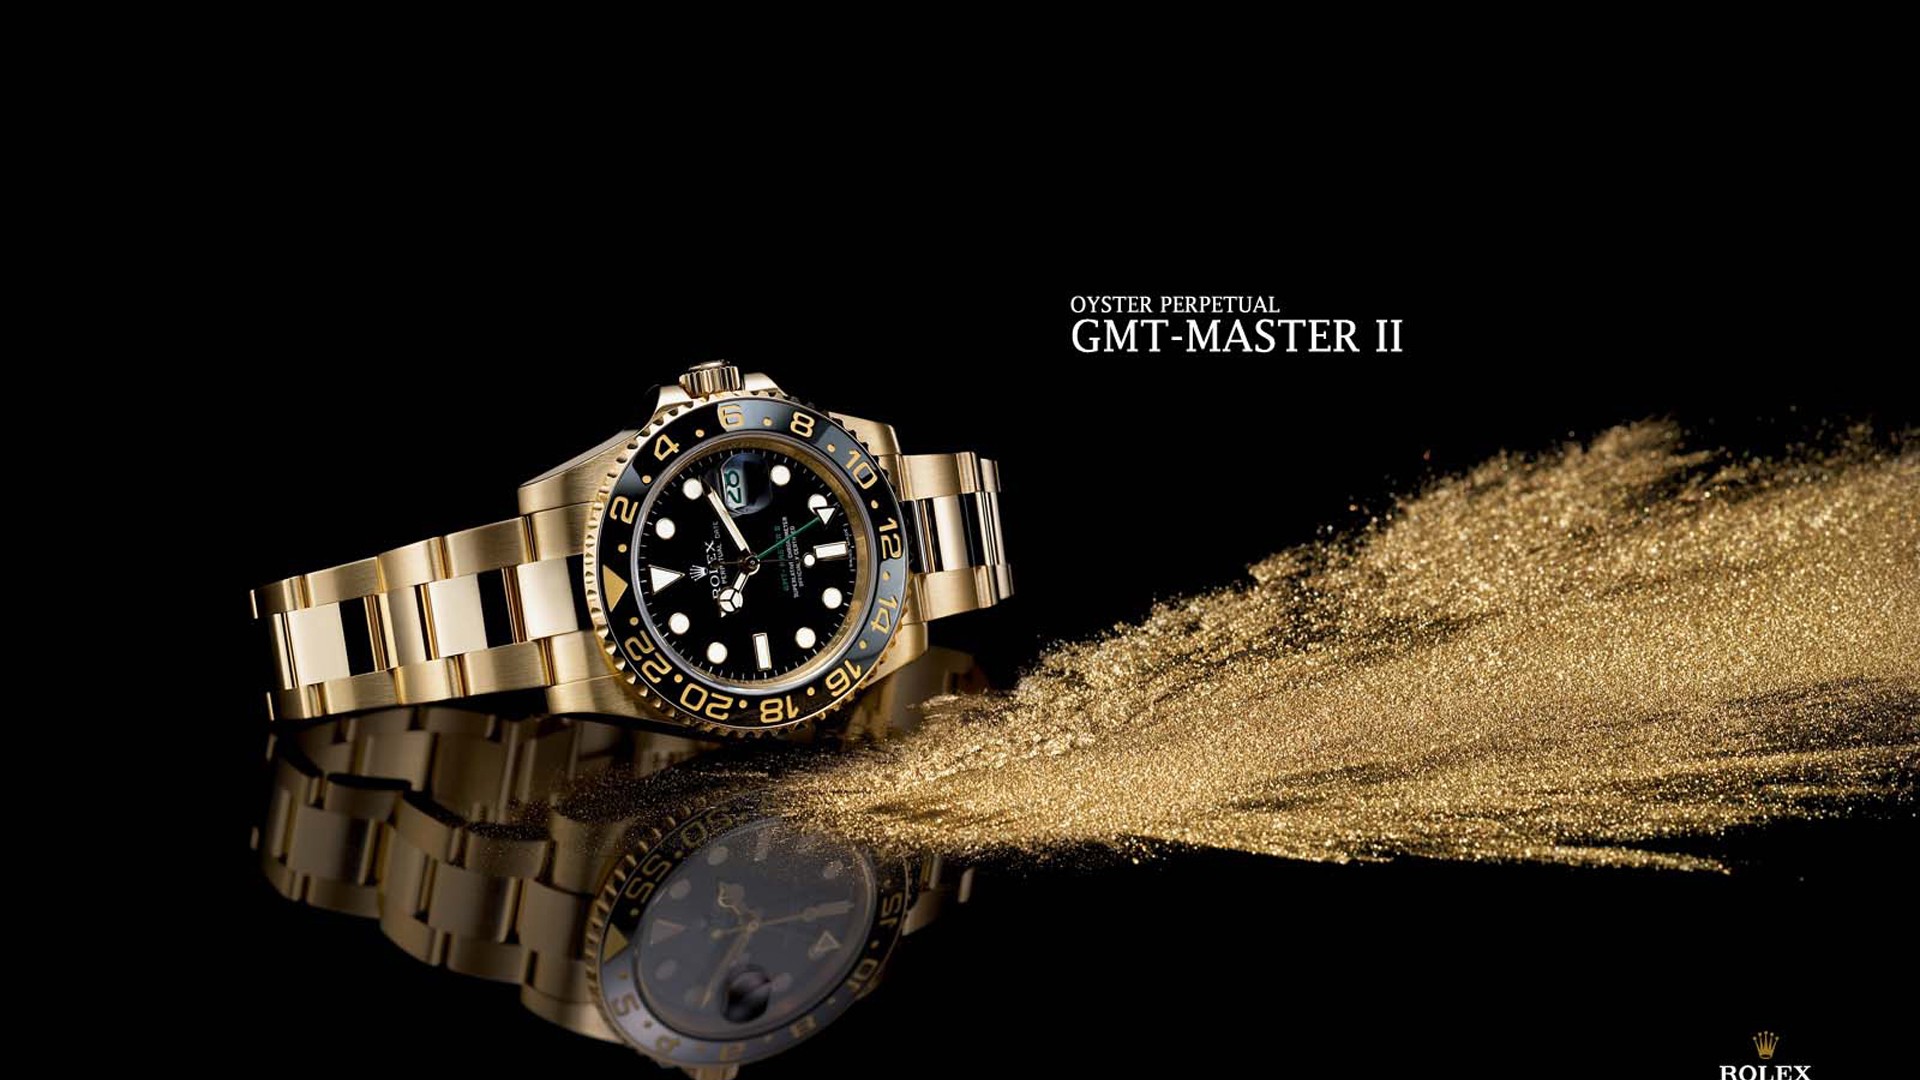 gold_oyster_perpetual_gmt_master_ii_rolex_watch_hd_rolex-1920x1080